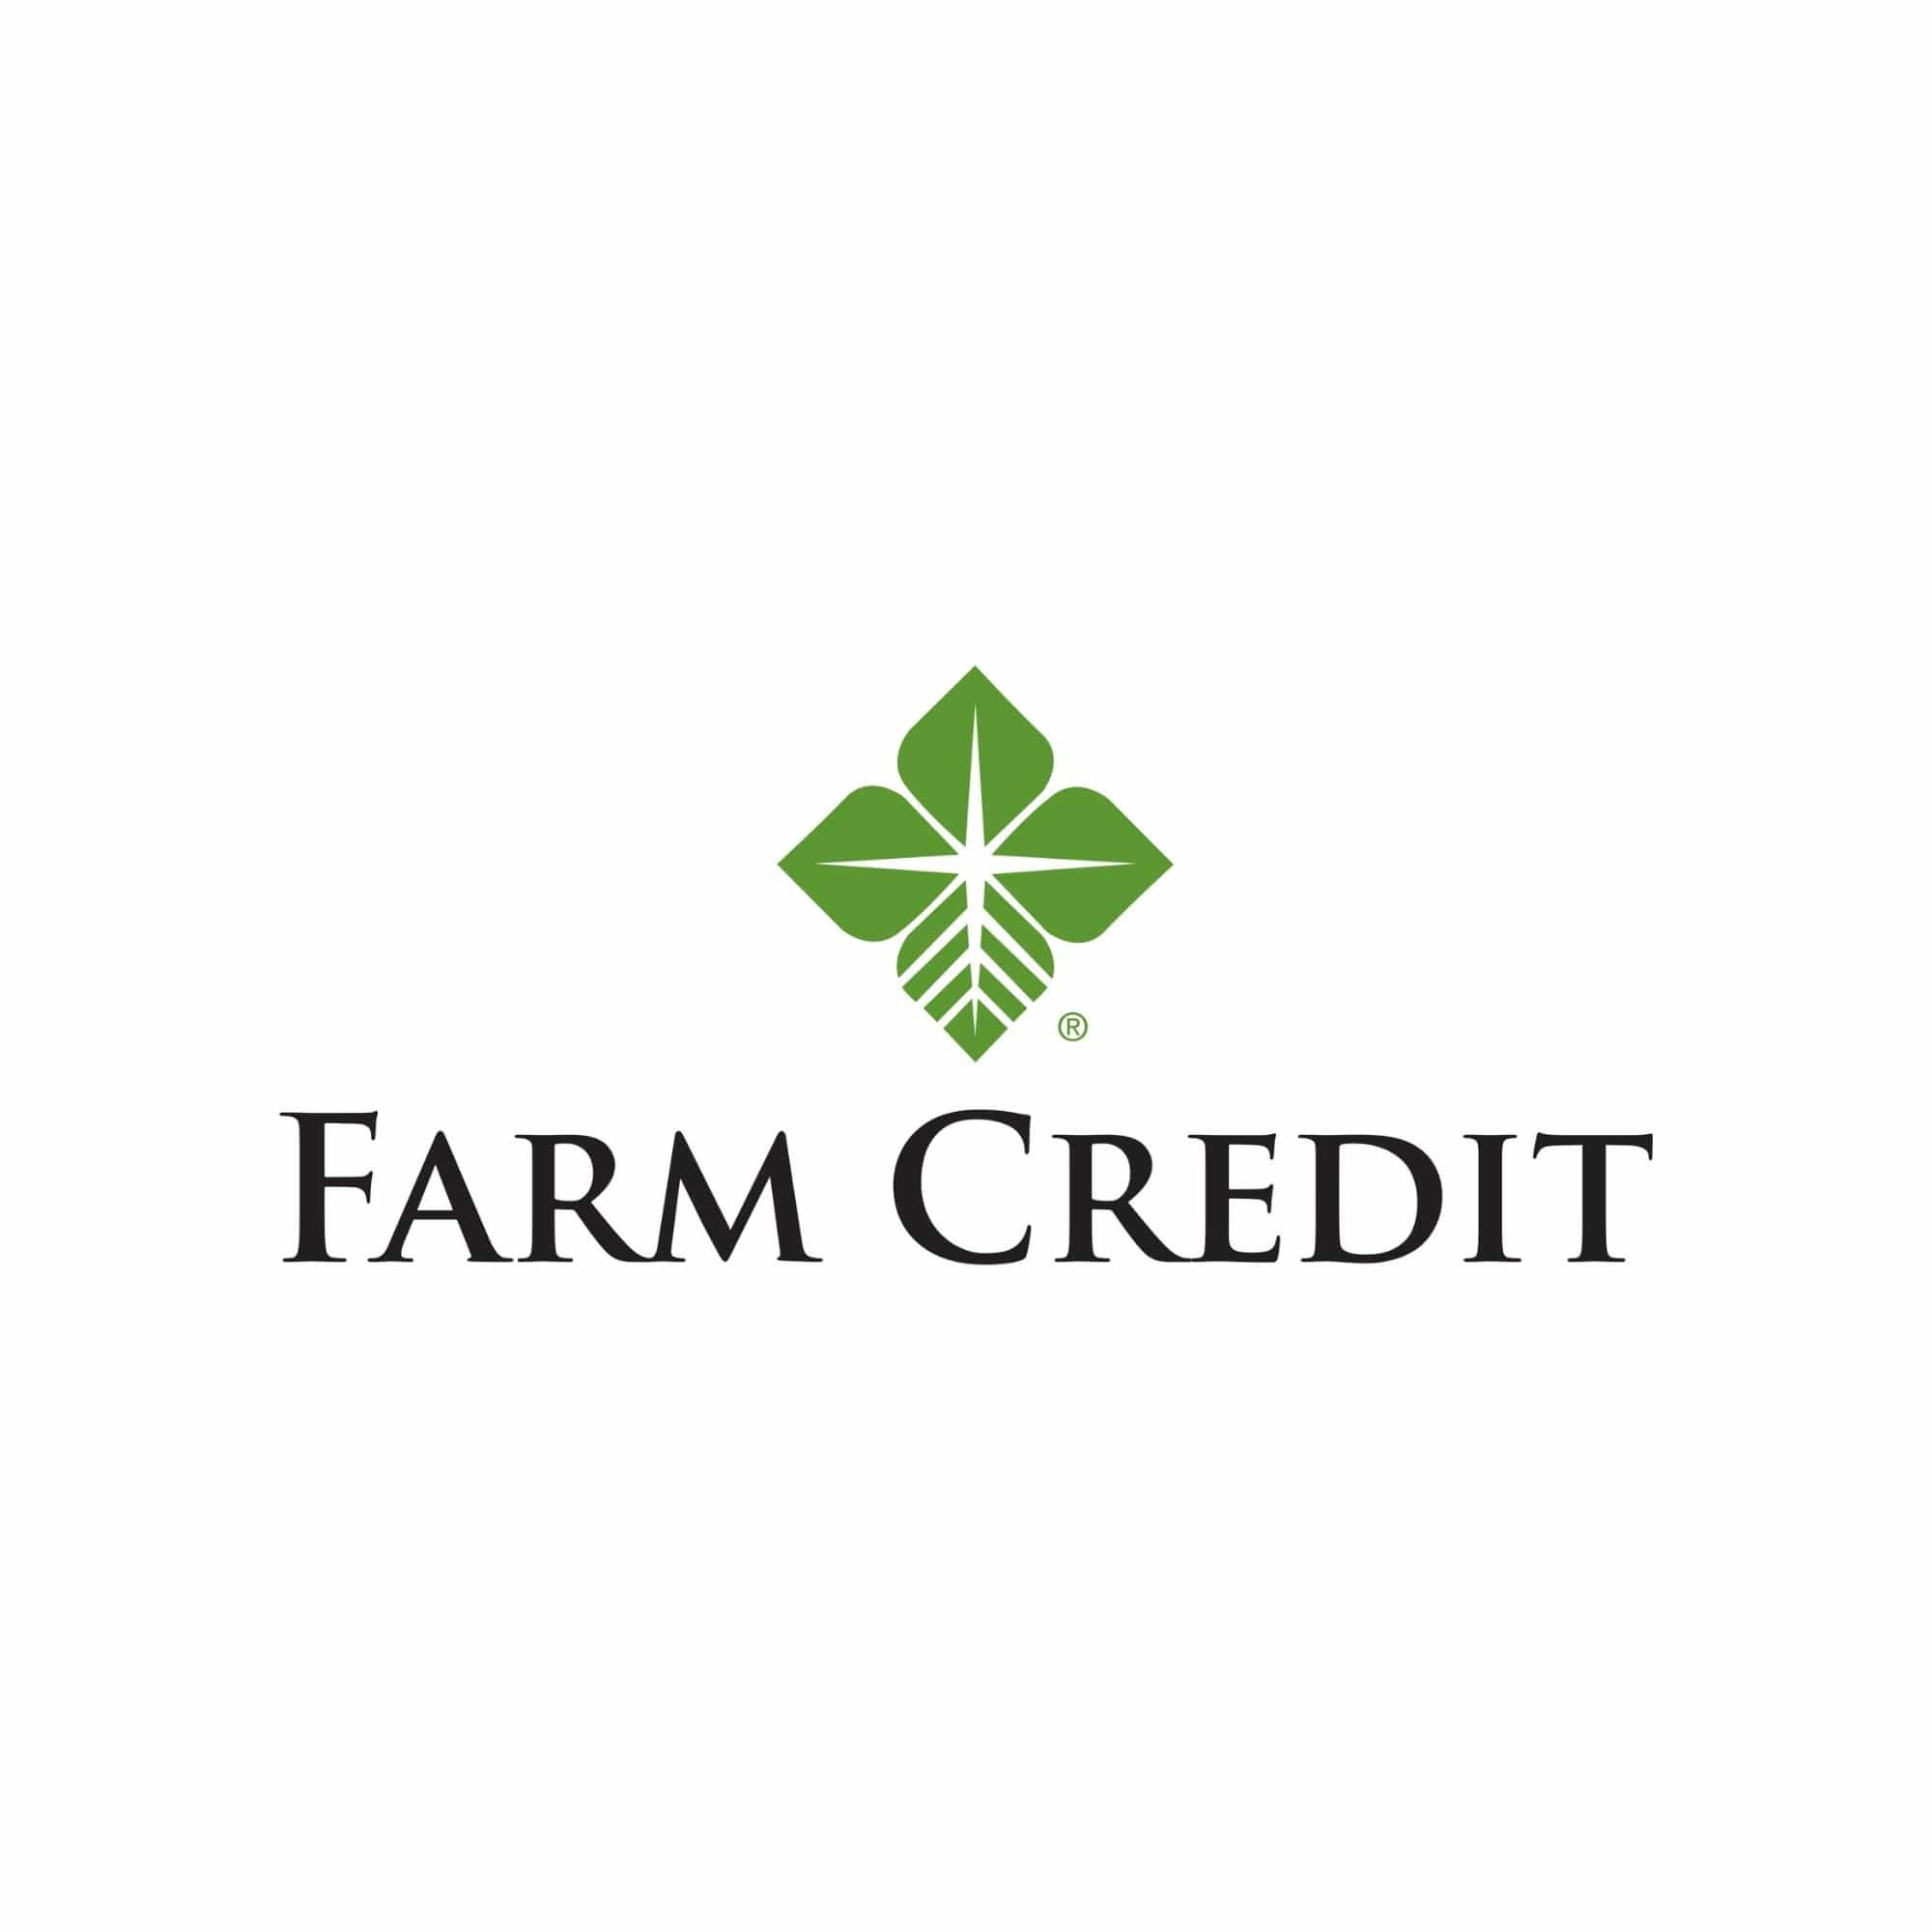 Farm Credit of Central Florida